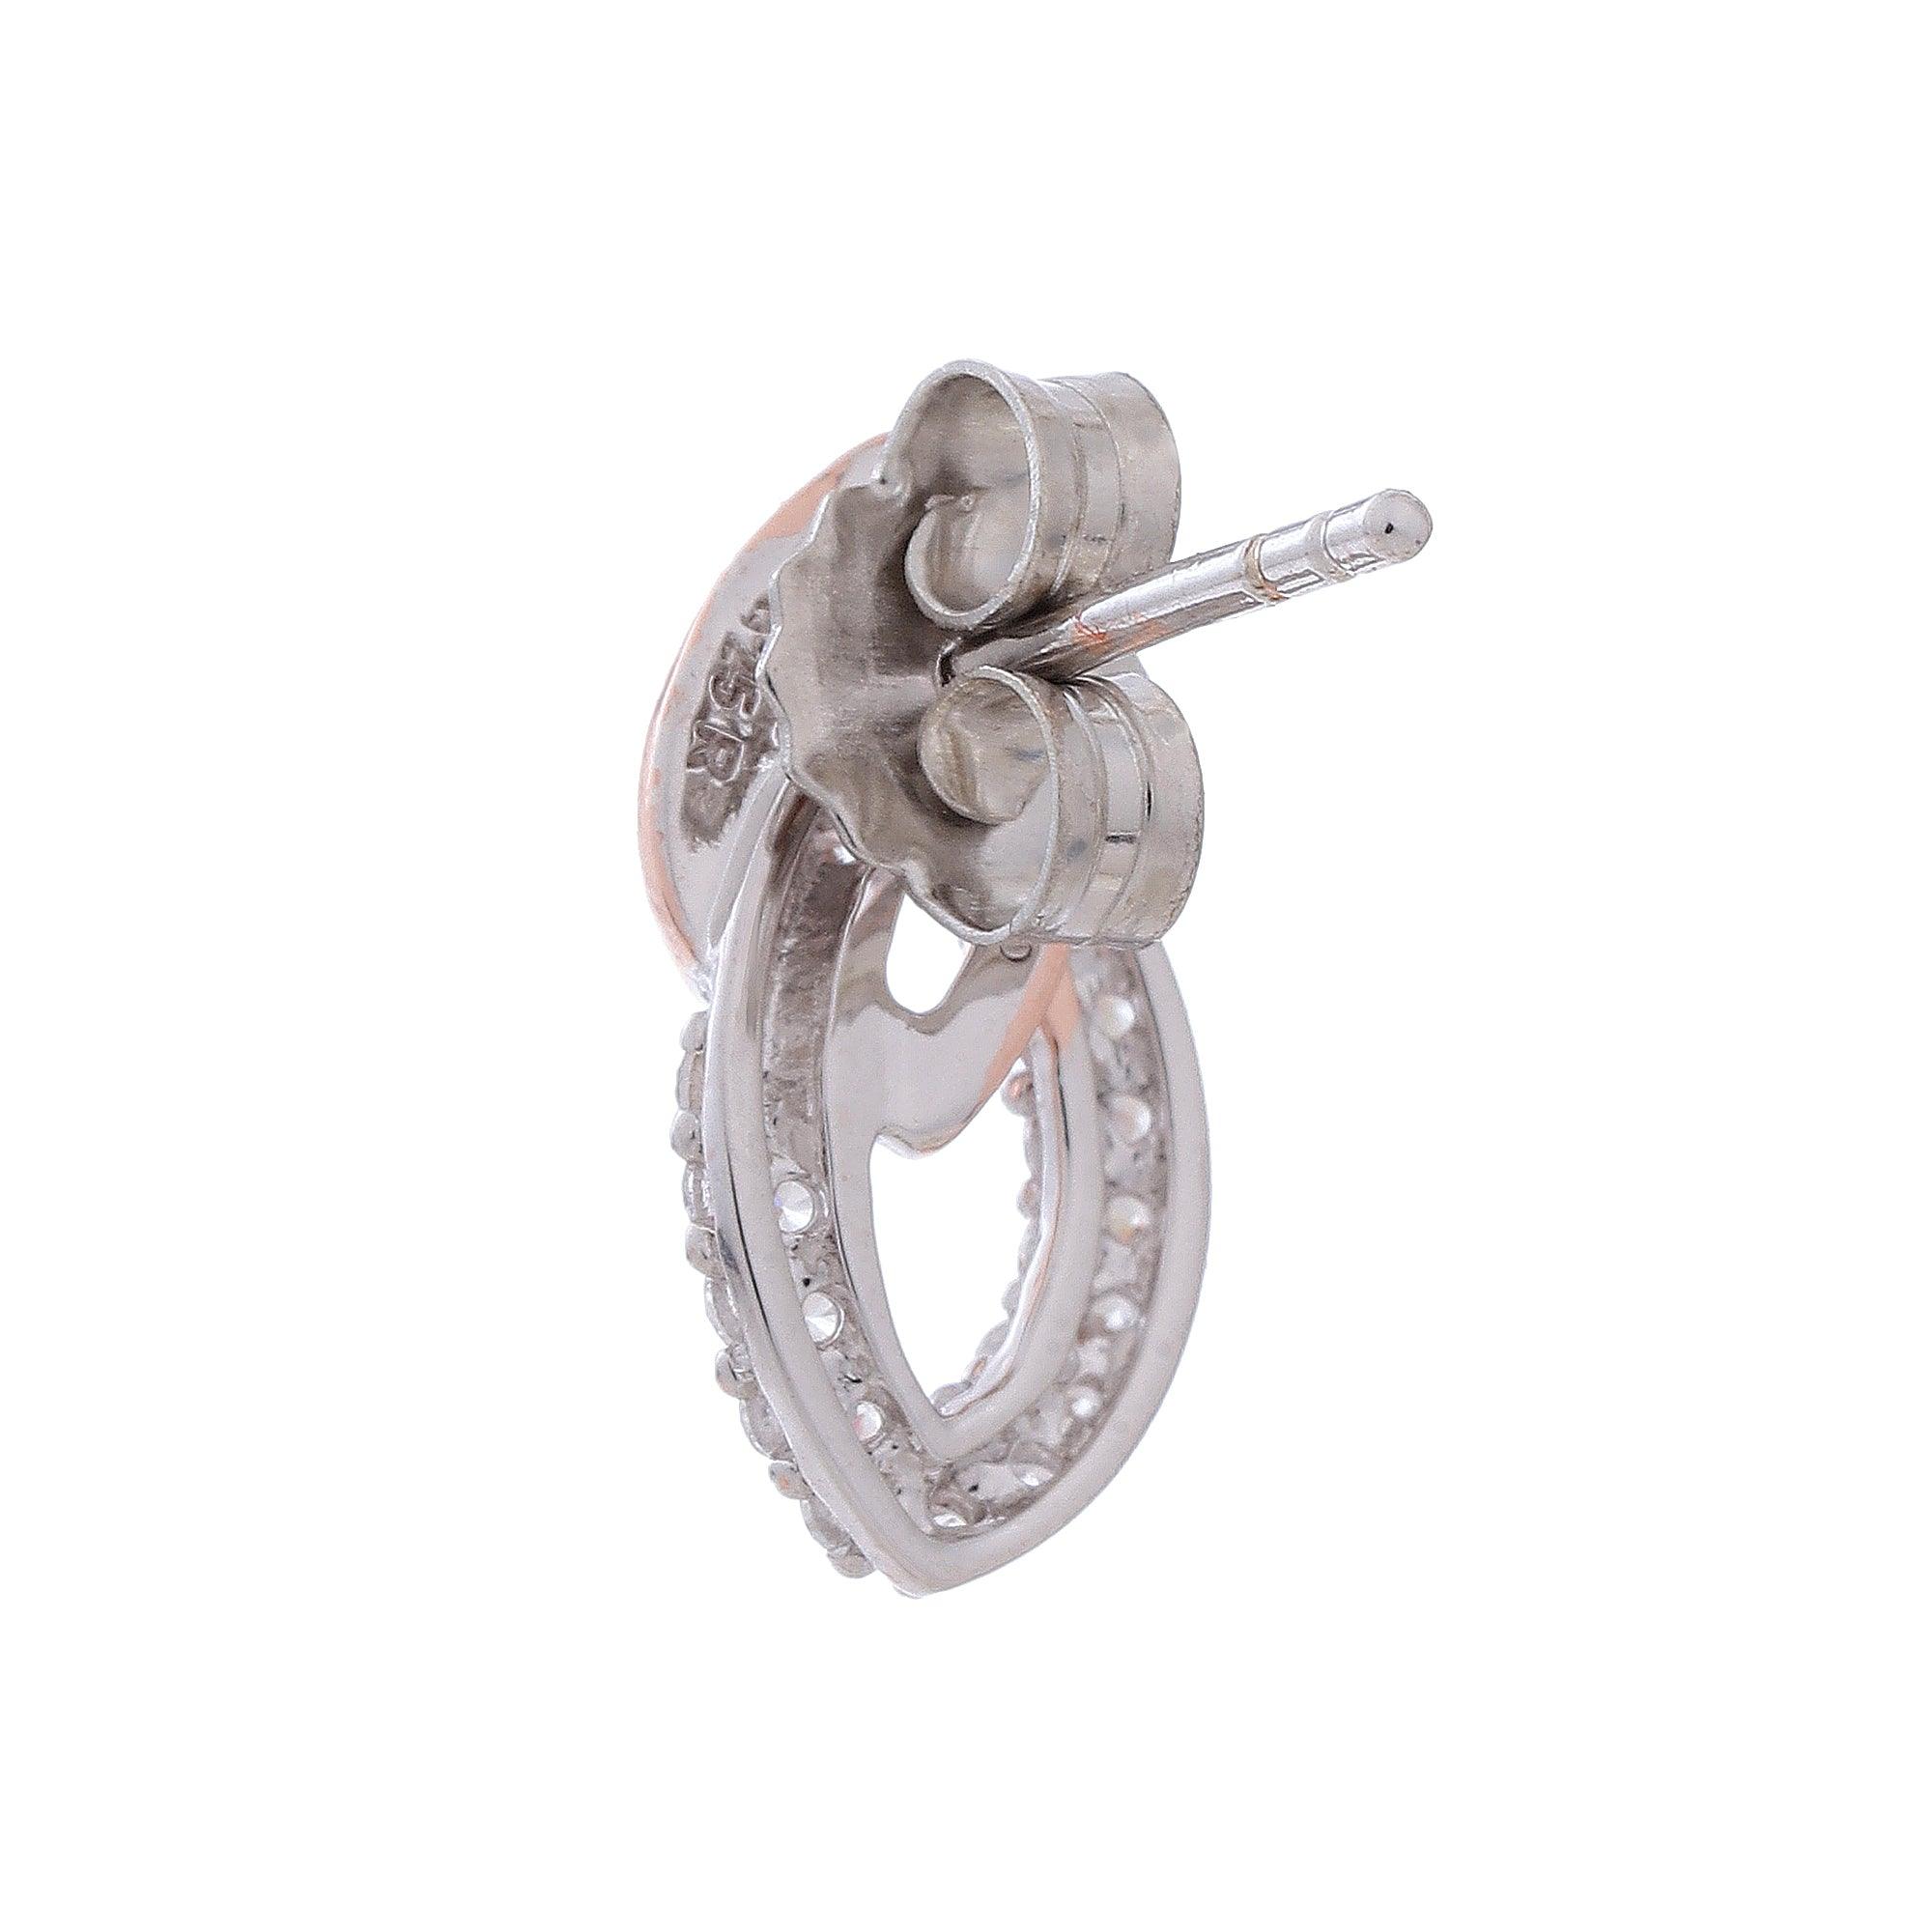 Iridescent Gaze Silver Earrings - Diavo Jewels